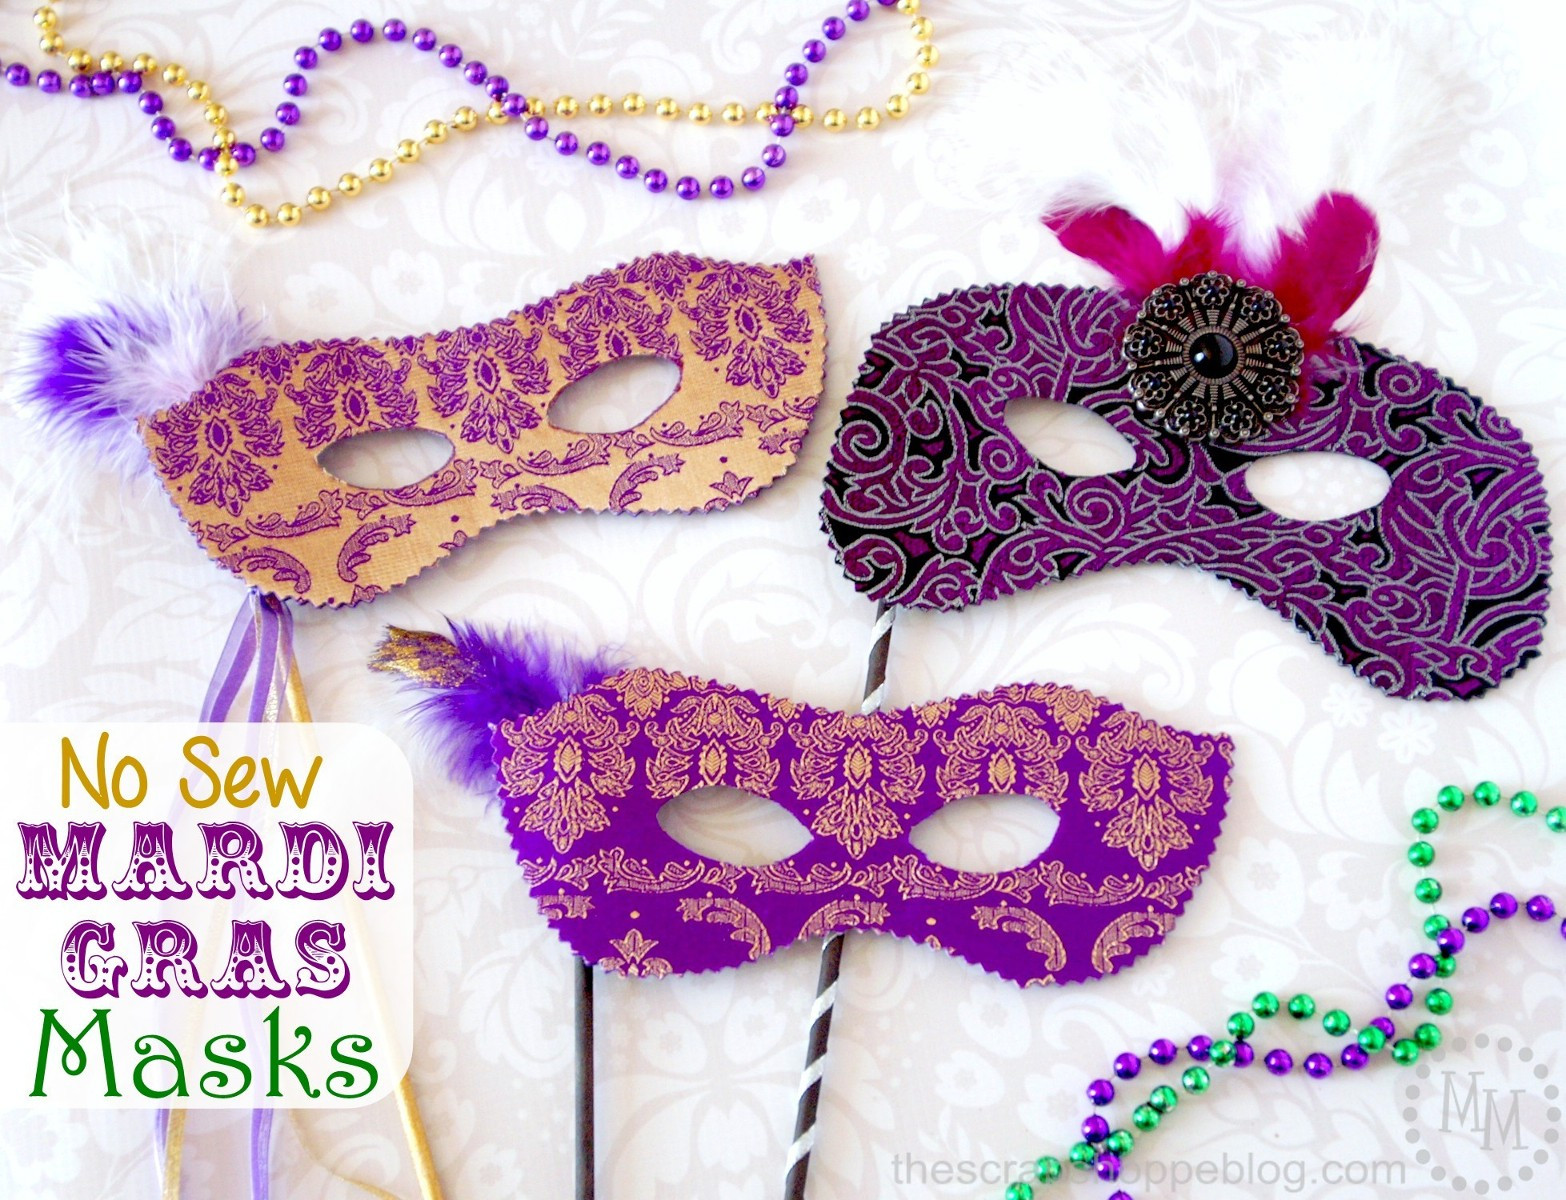 Best ideas about DIY Mardi Gras Masks
. Save or Pin No Sew Mardi Gras Masks The Scrap Shoppe Now.